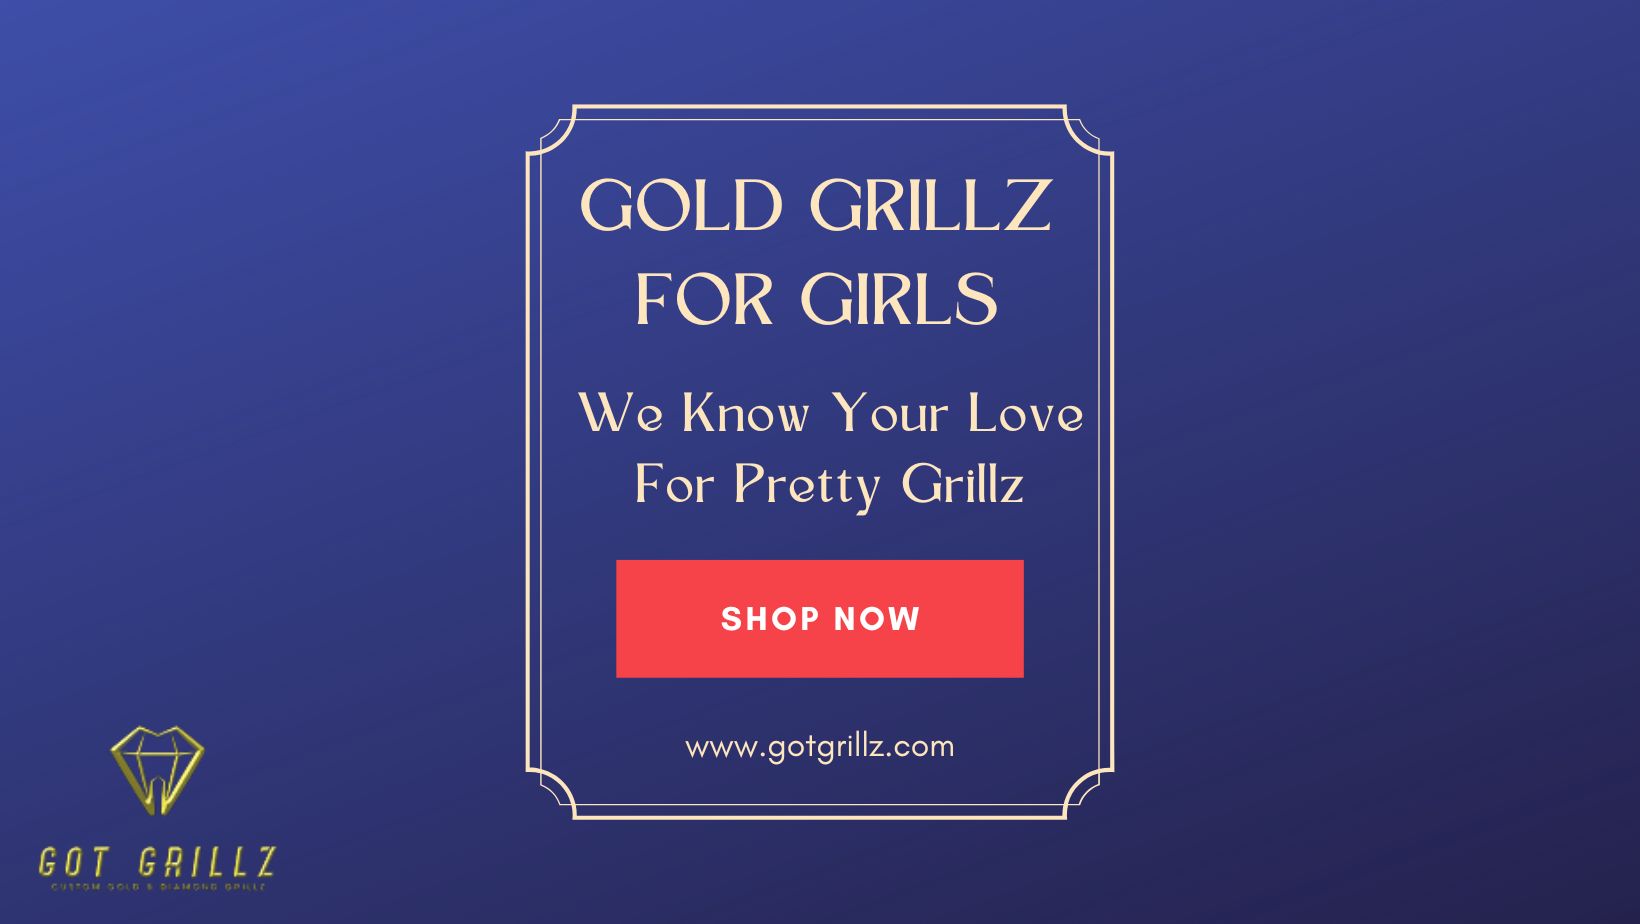 Gold Grillz For Girls Houston - GotGrillz